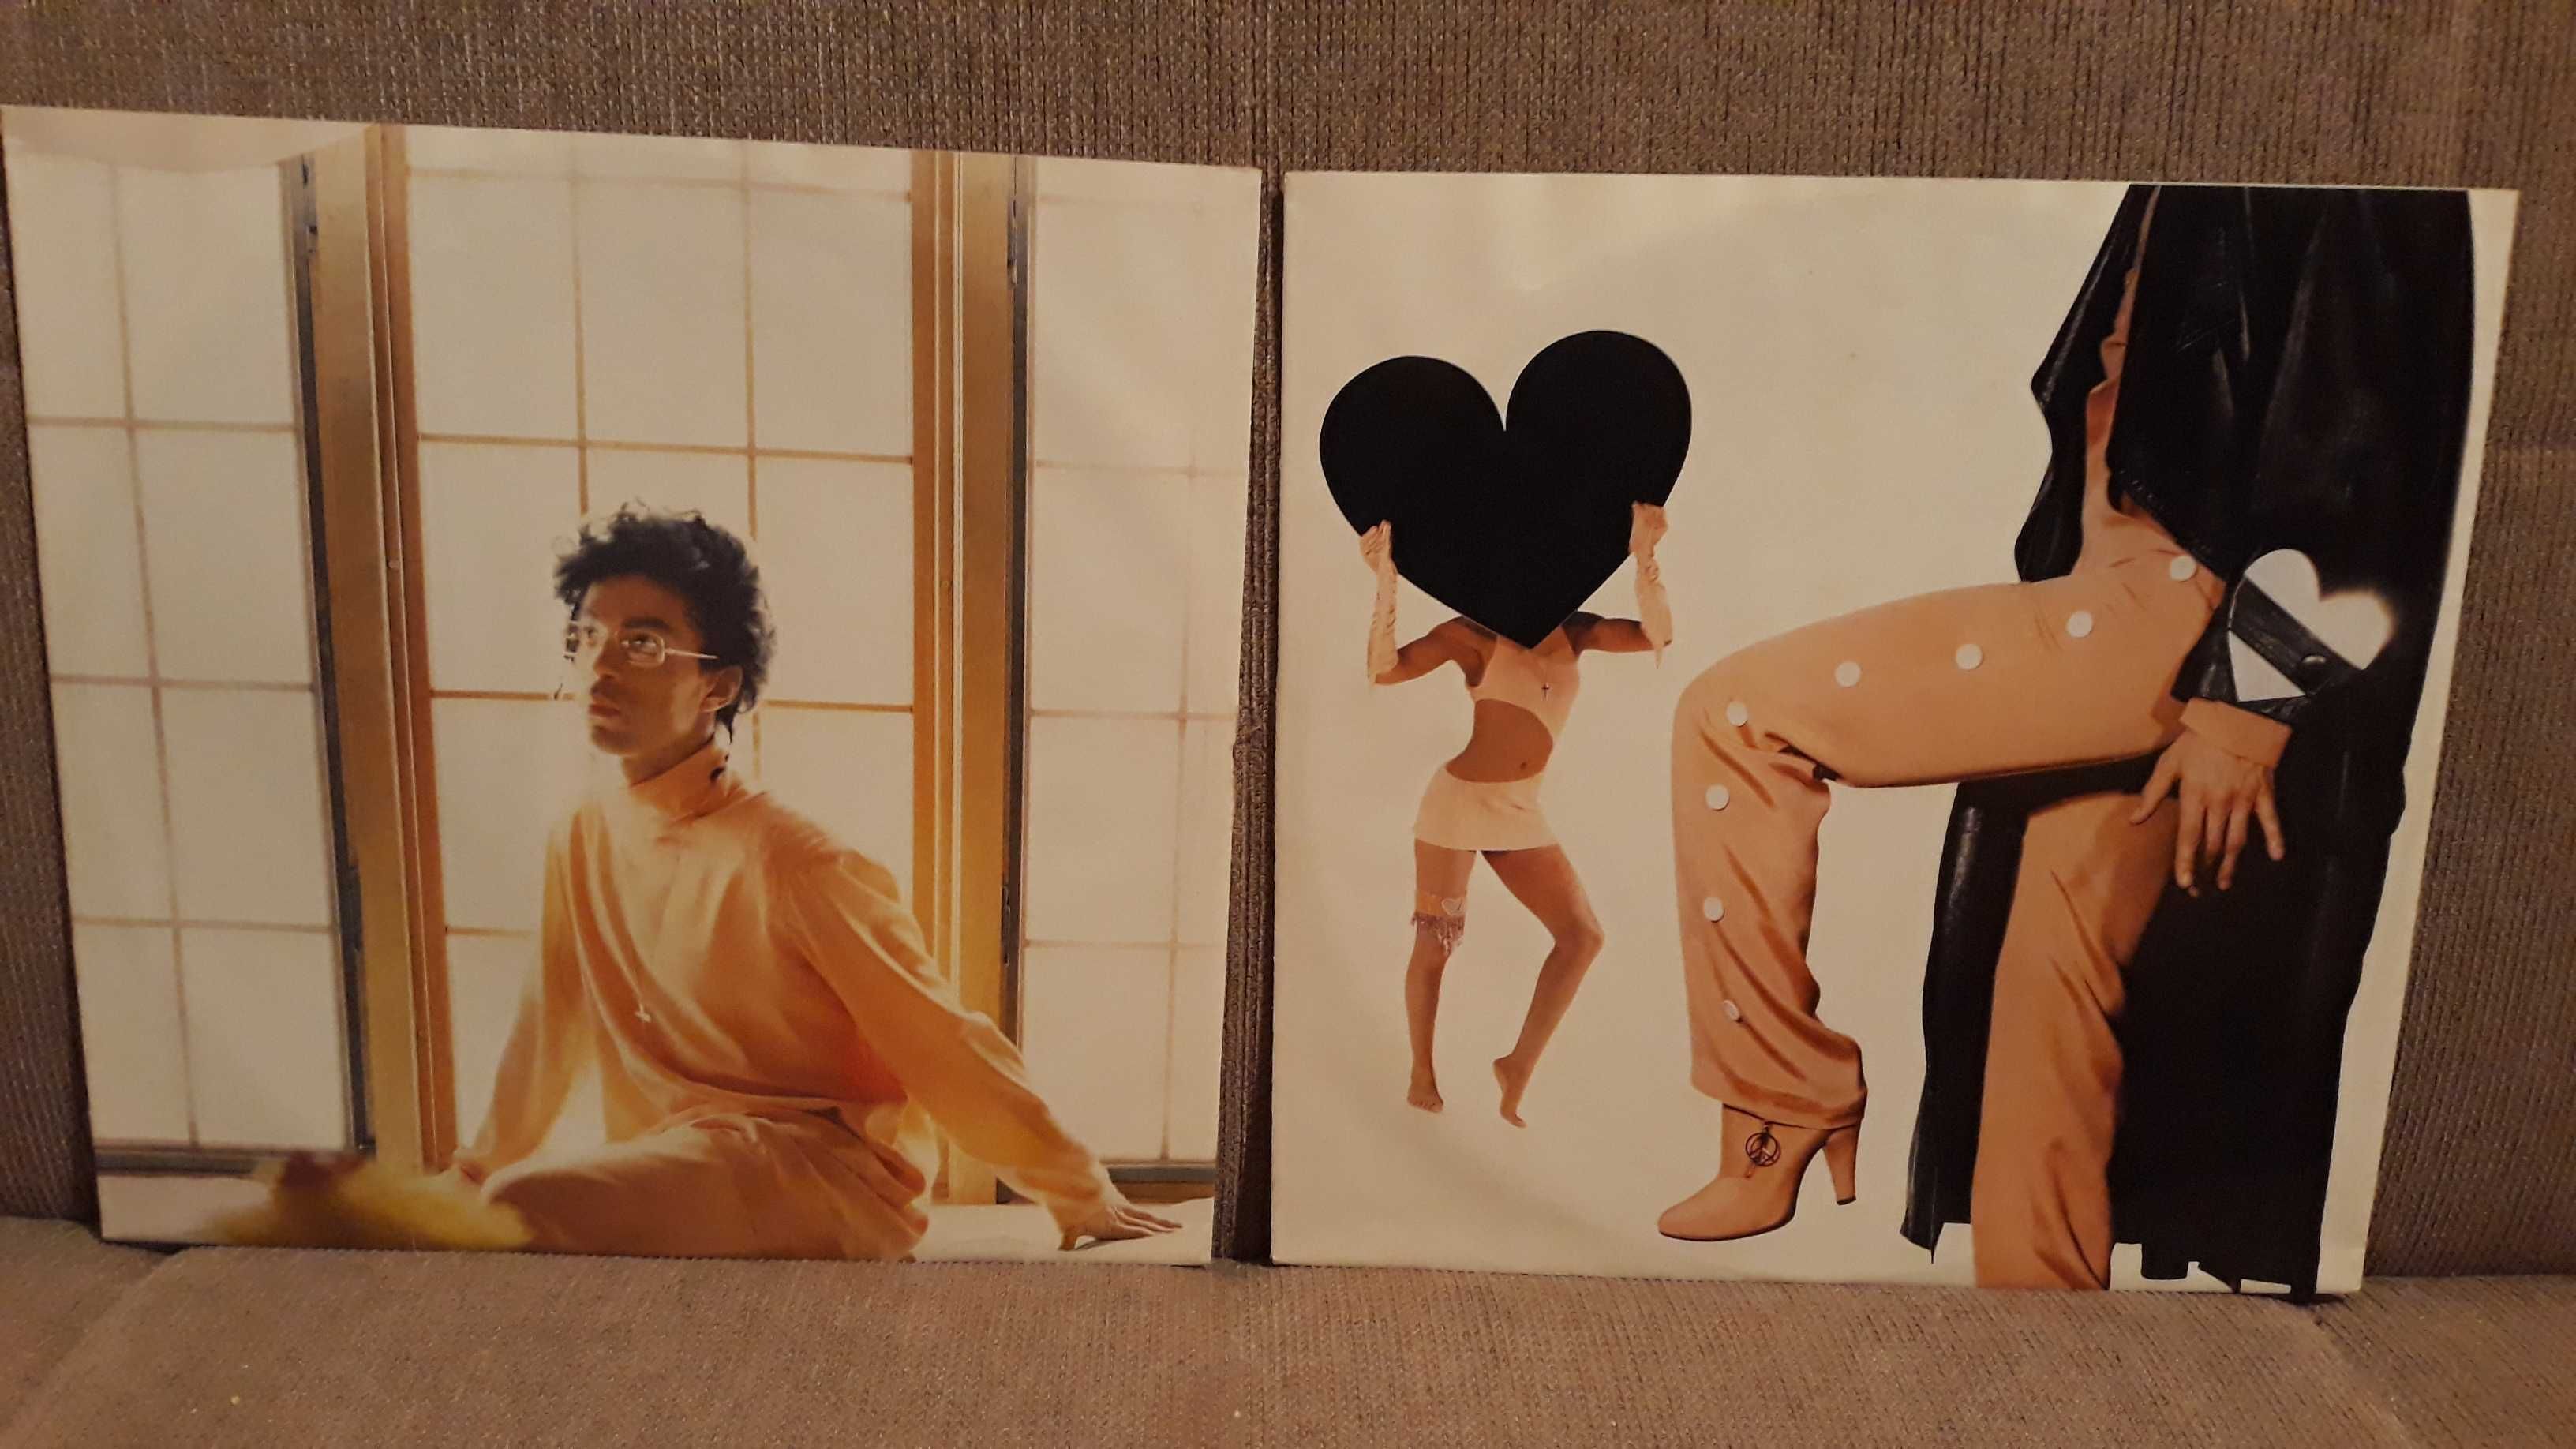 Prince - Sign "O" The Times - 2 LP - portes incluidos